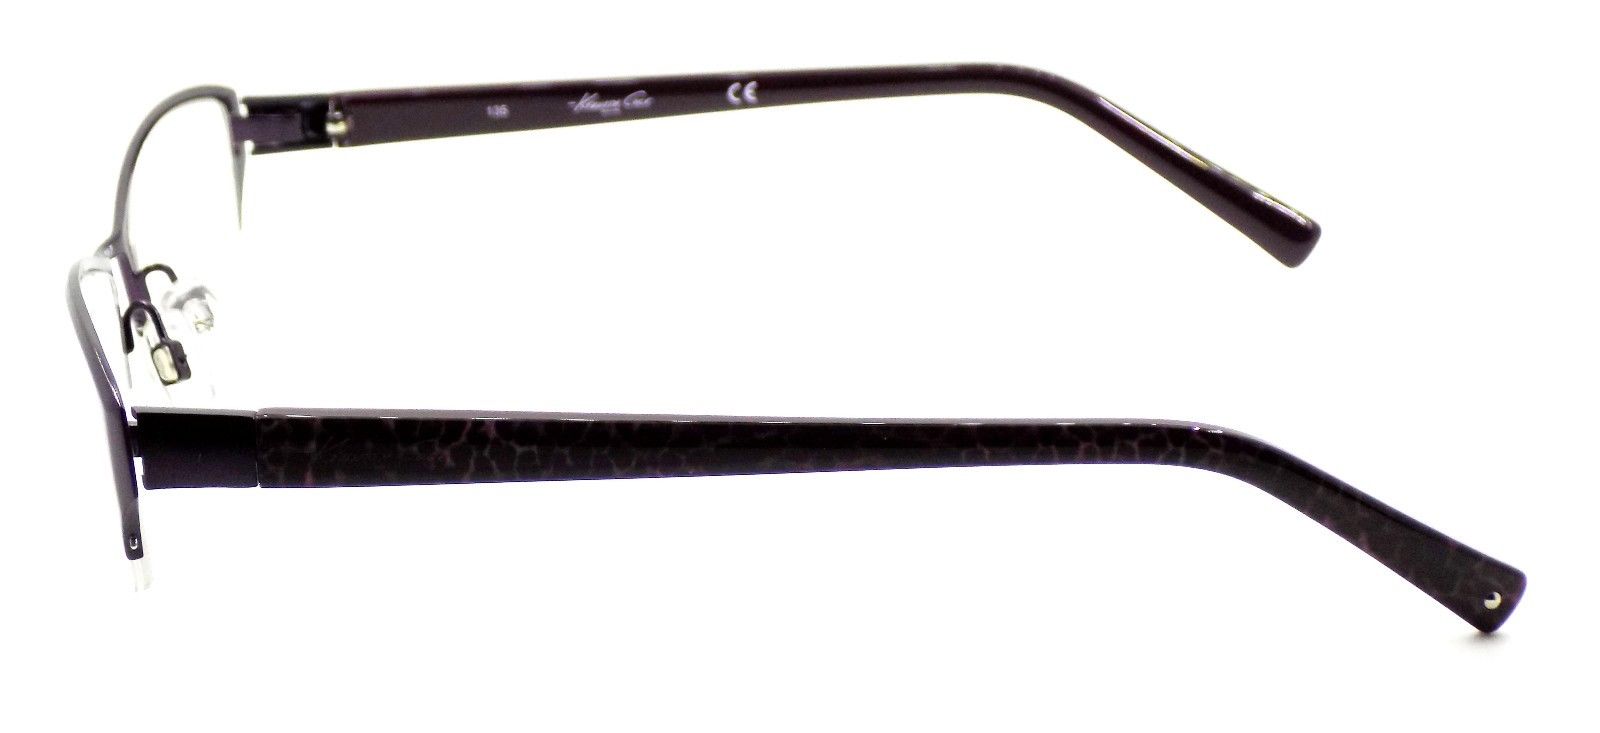 3-Kenneth Cole NY KC160 069 Women's Eyeglasses Frames 53-17-135 Bordeaux + Case-726773164052-IKSpecs